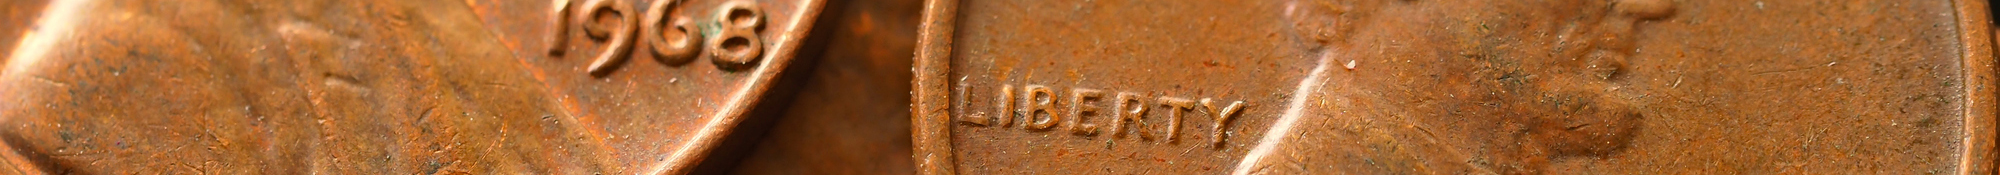 close up of vintage pennies